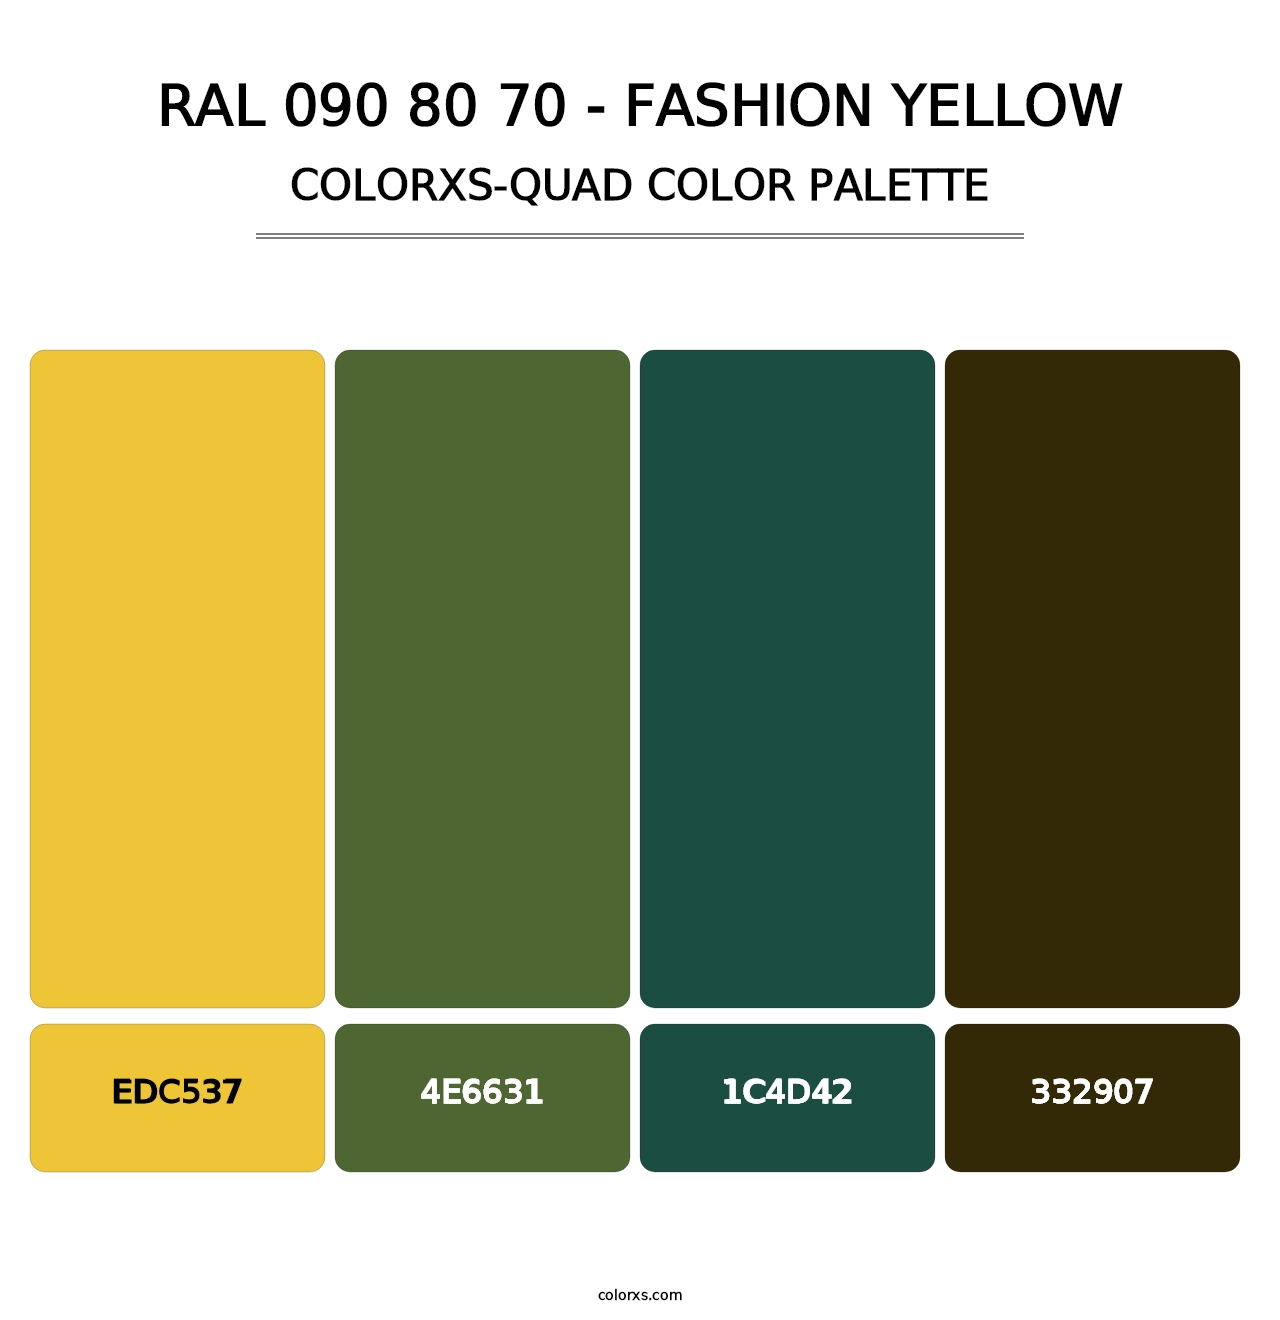 RAL 090 80 70 - Fashion Yellow - Colorxs Quad Palette